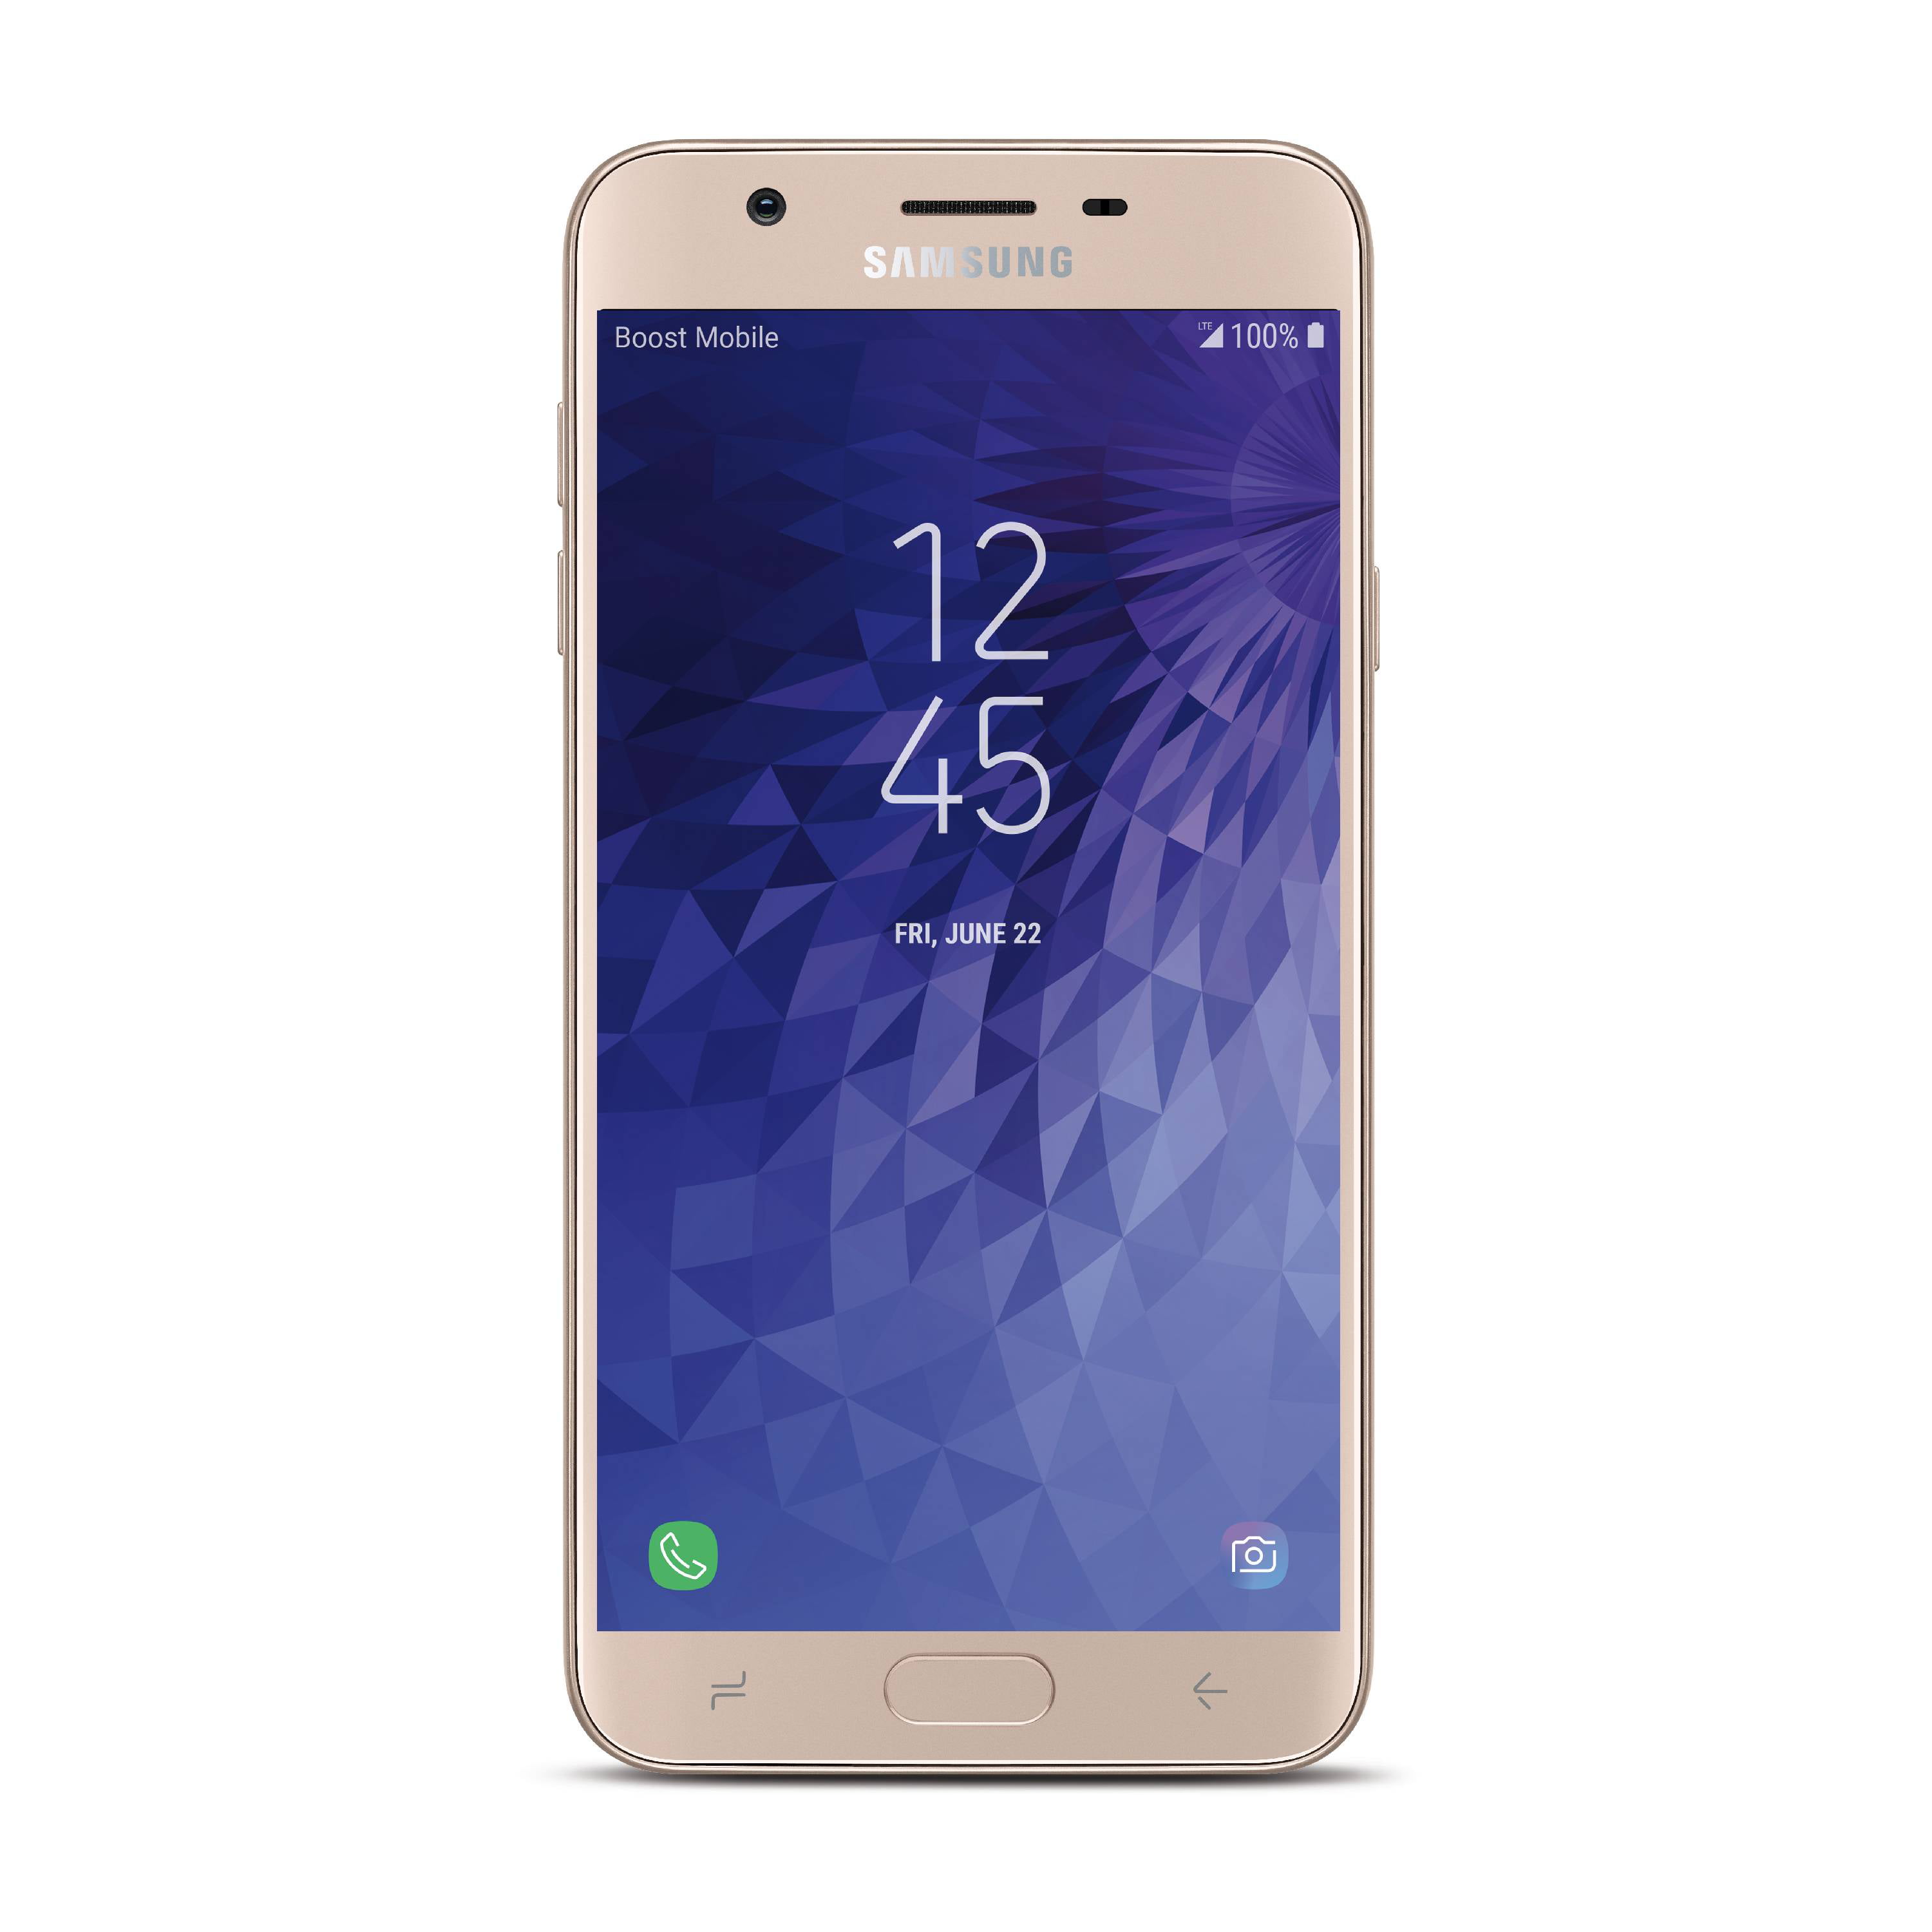 Boost Mobile Samsung J7 Refine 32GB Prepaid Smartphone, Gold